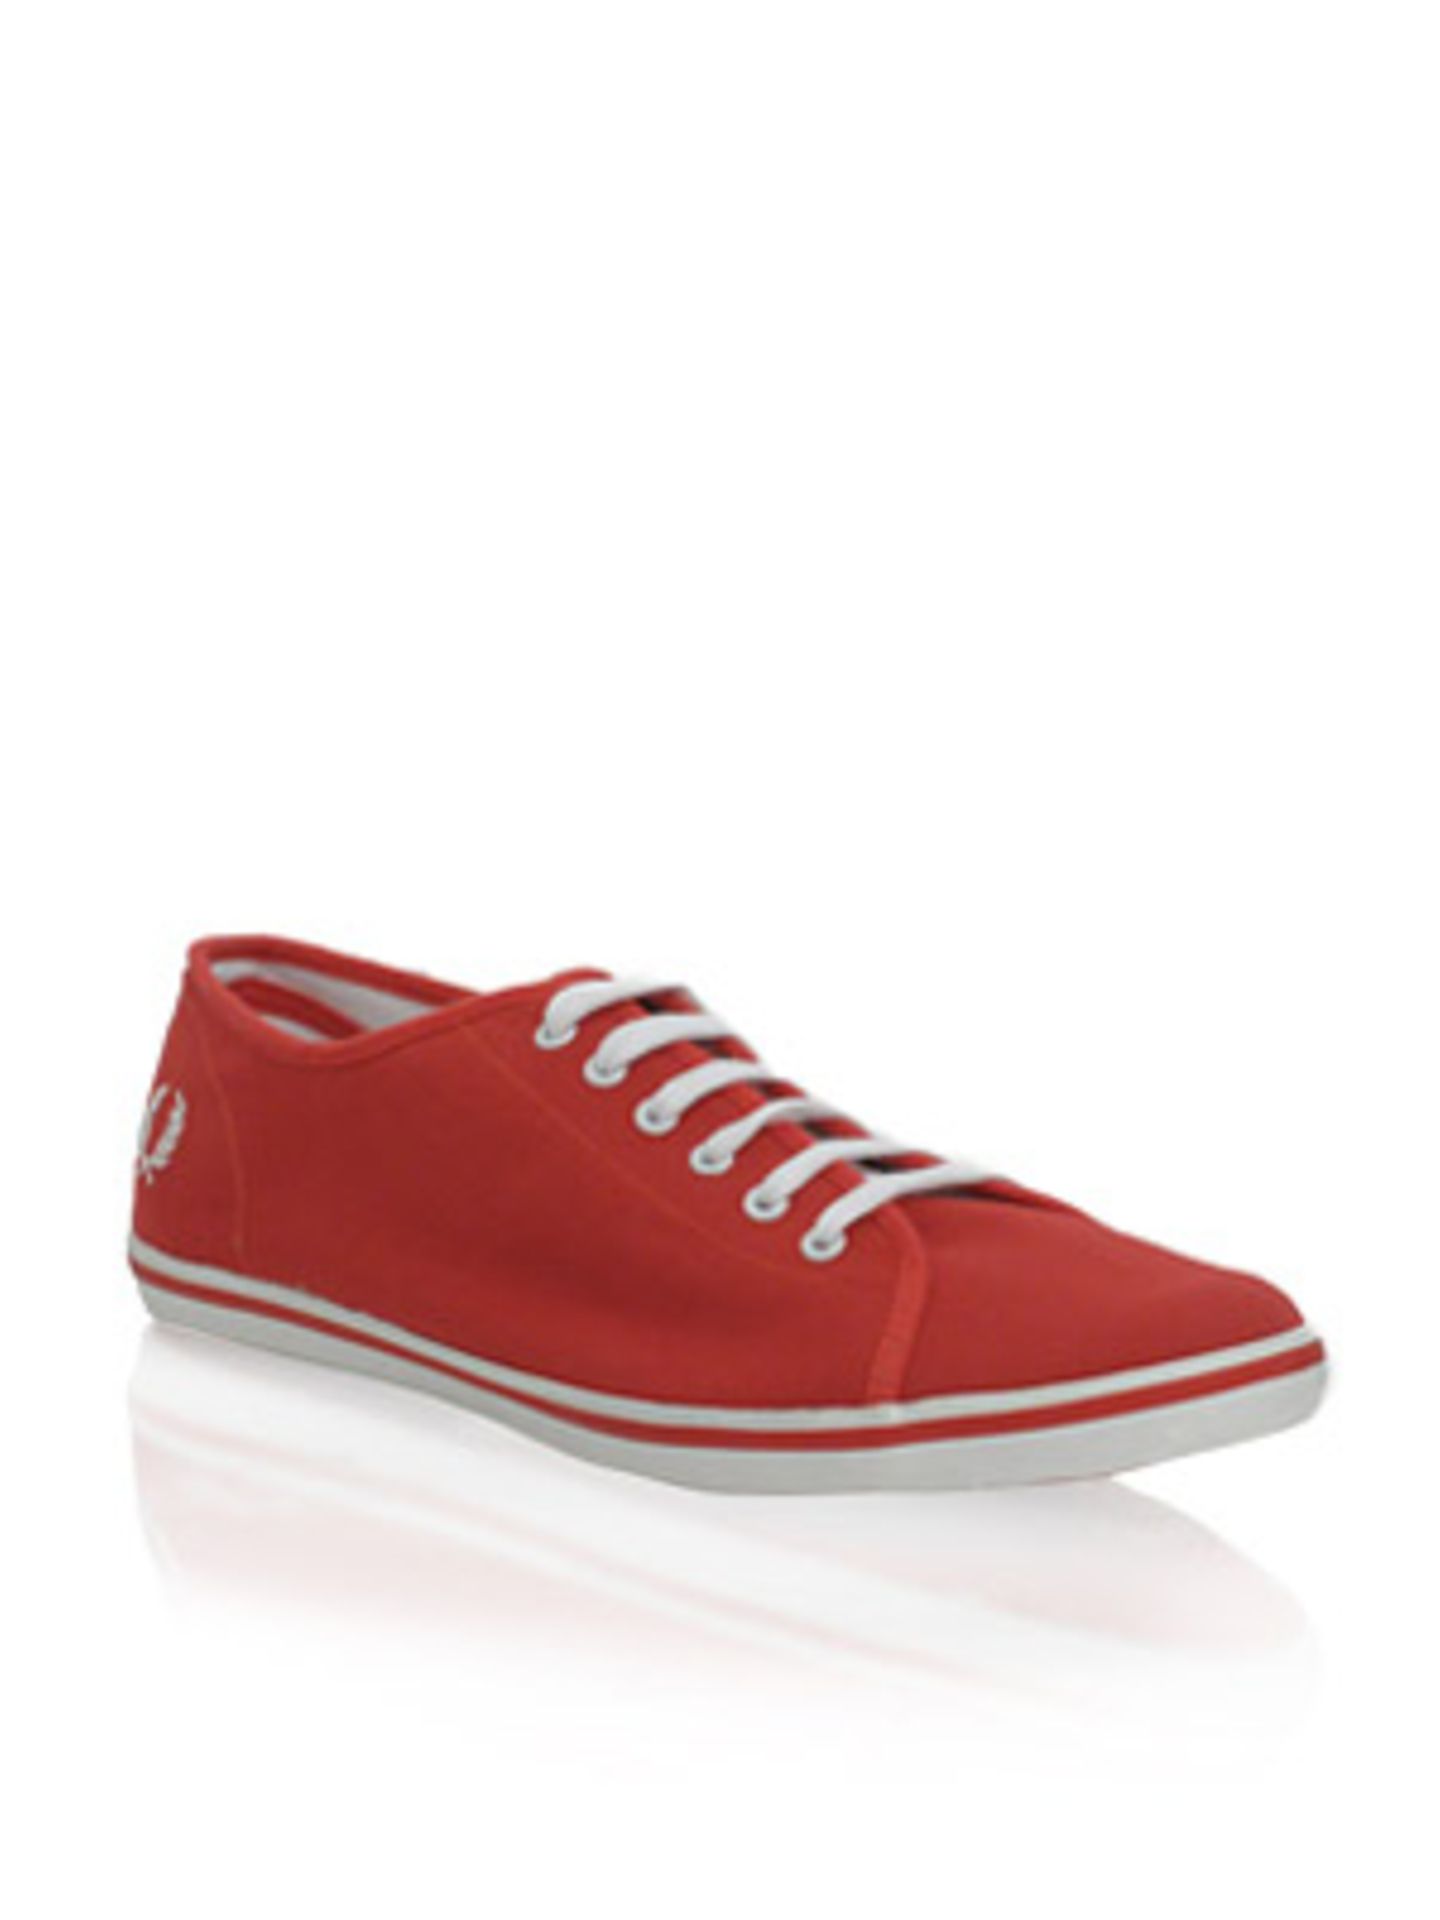 Rote Sneakers im angesagten Maritim-Look von Fred Perry, um 39 Euro. Über www.asos.com.